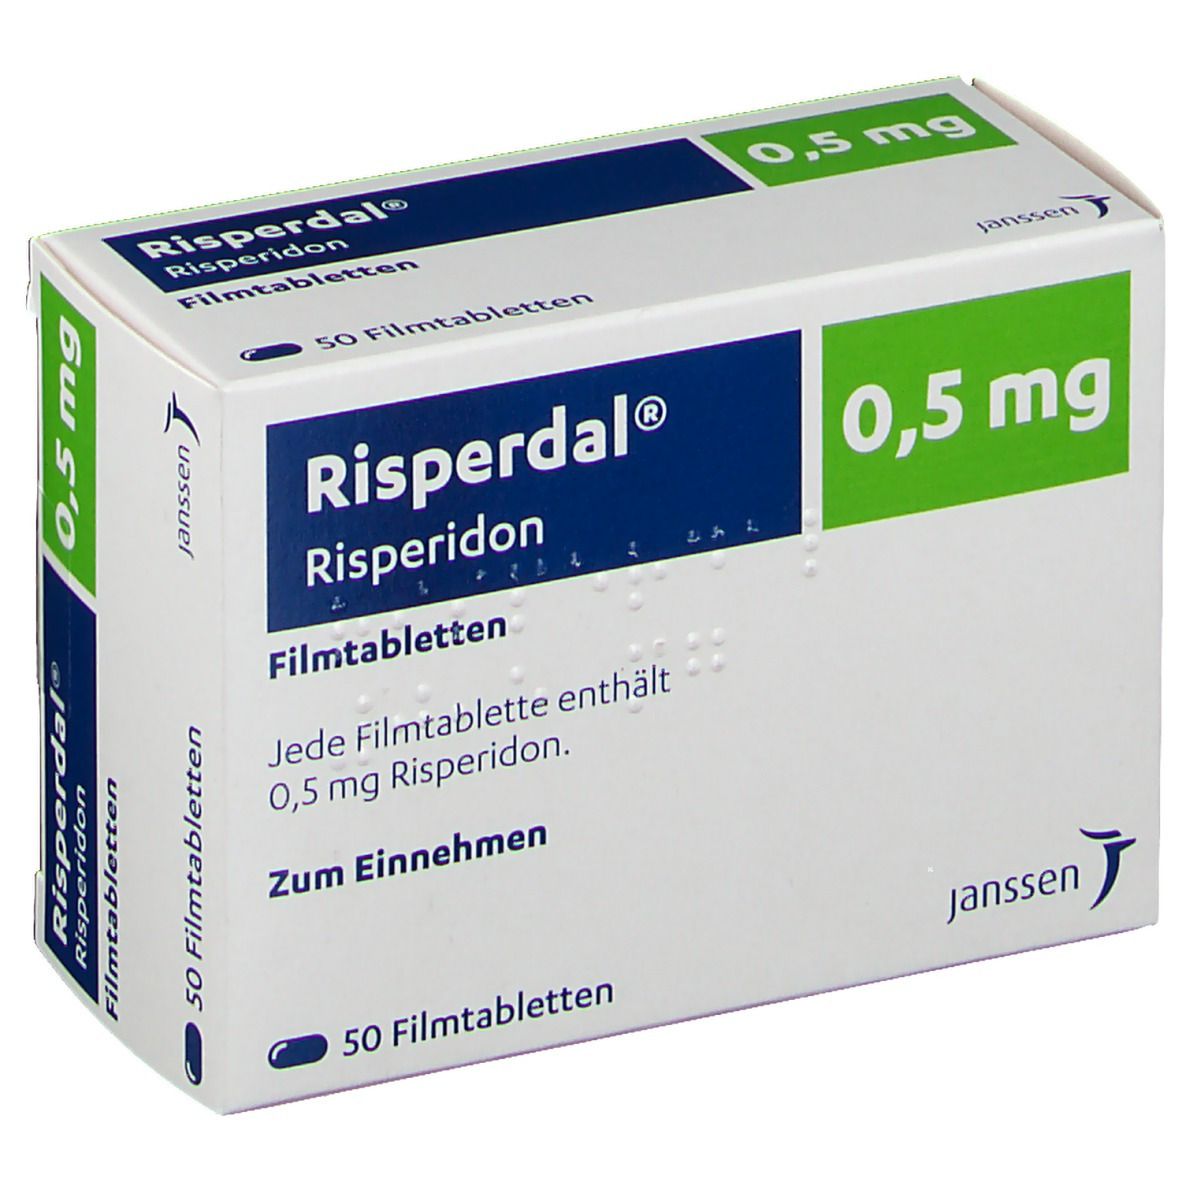 Risperdal® 0,5 mg